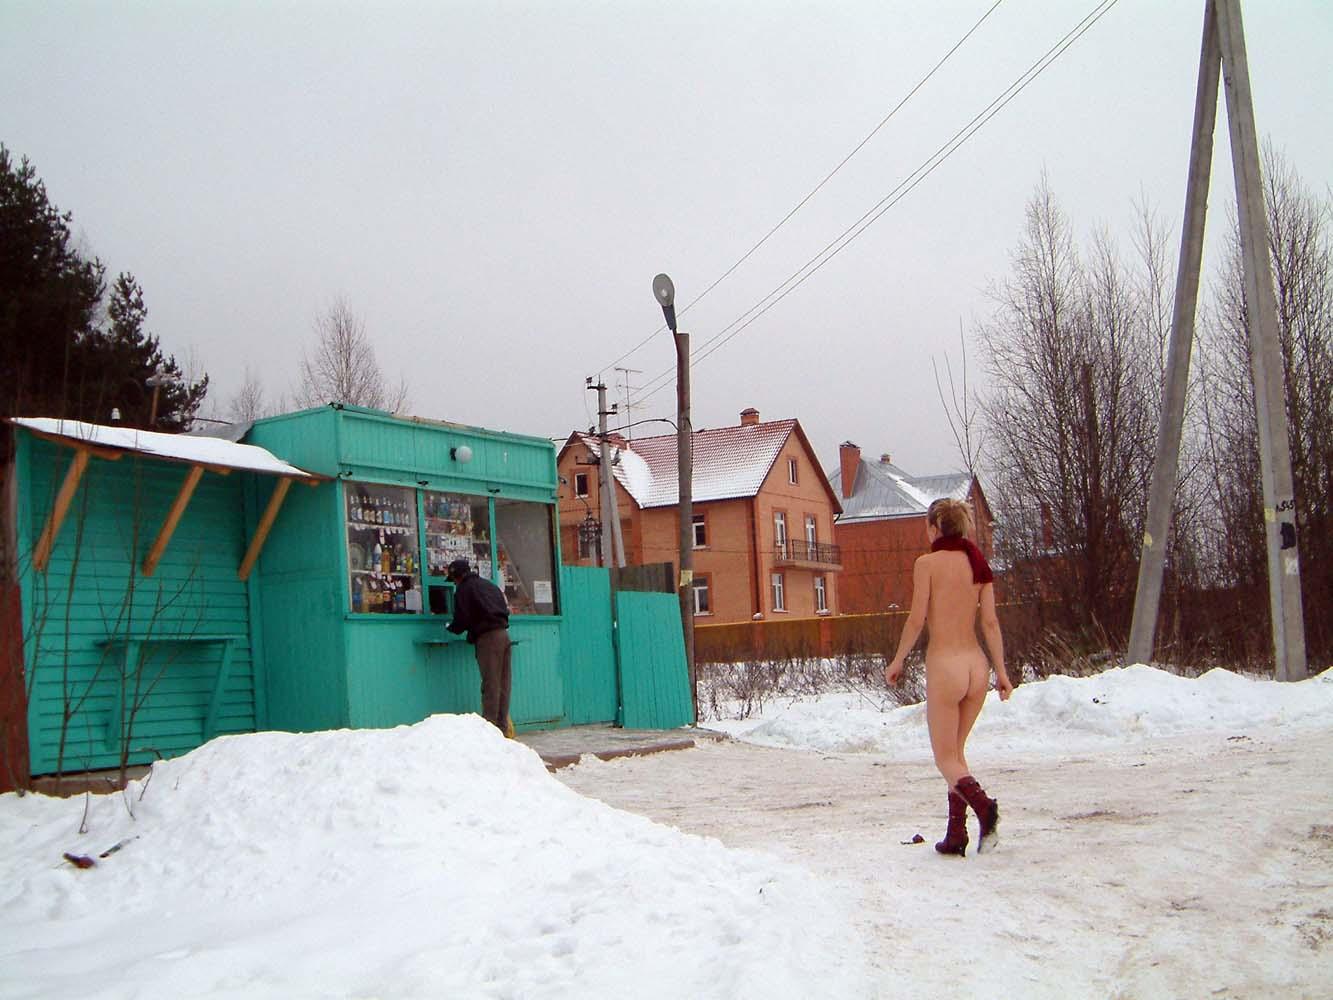 Ludmila from NIR nude photos — Russian Sexy Girls